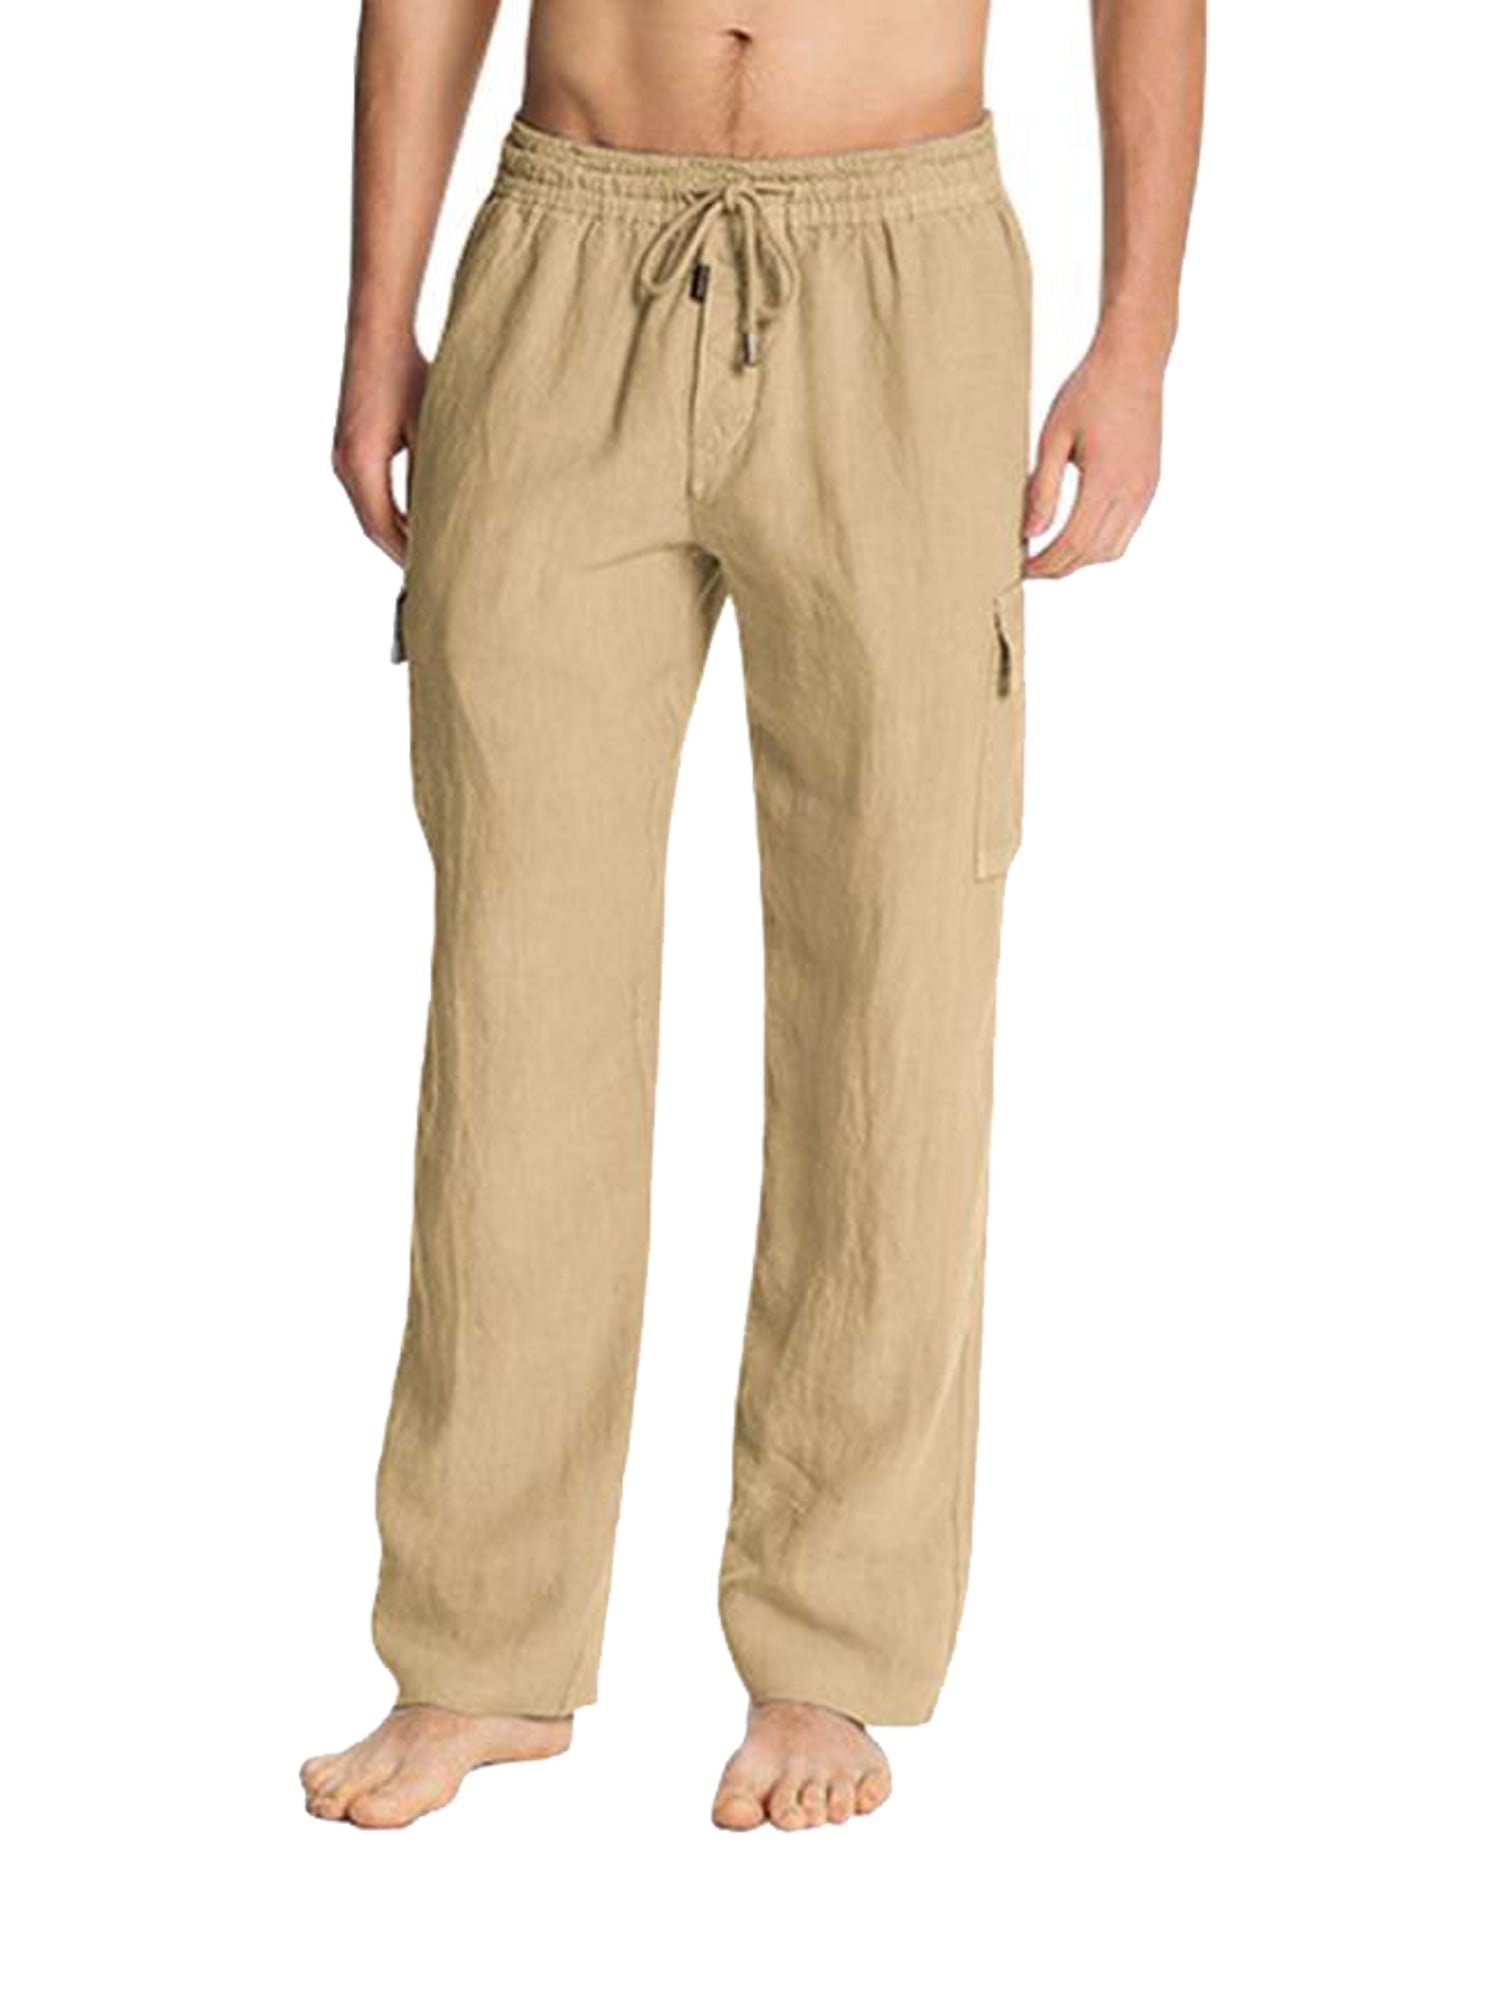 e-youth Mens Cotton Linen Pants Casual Elastic Waist Loose Baggy Trousers 